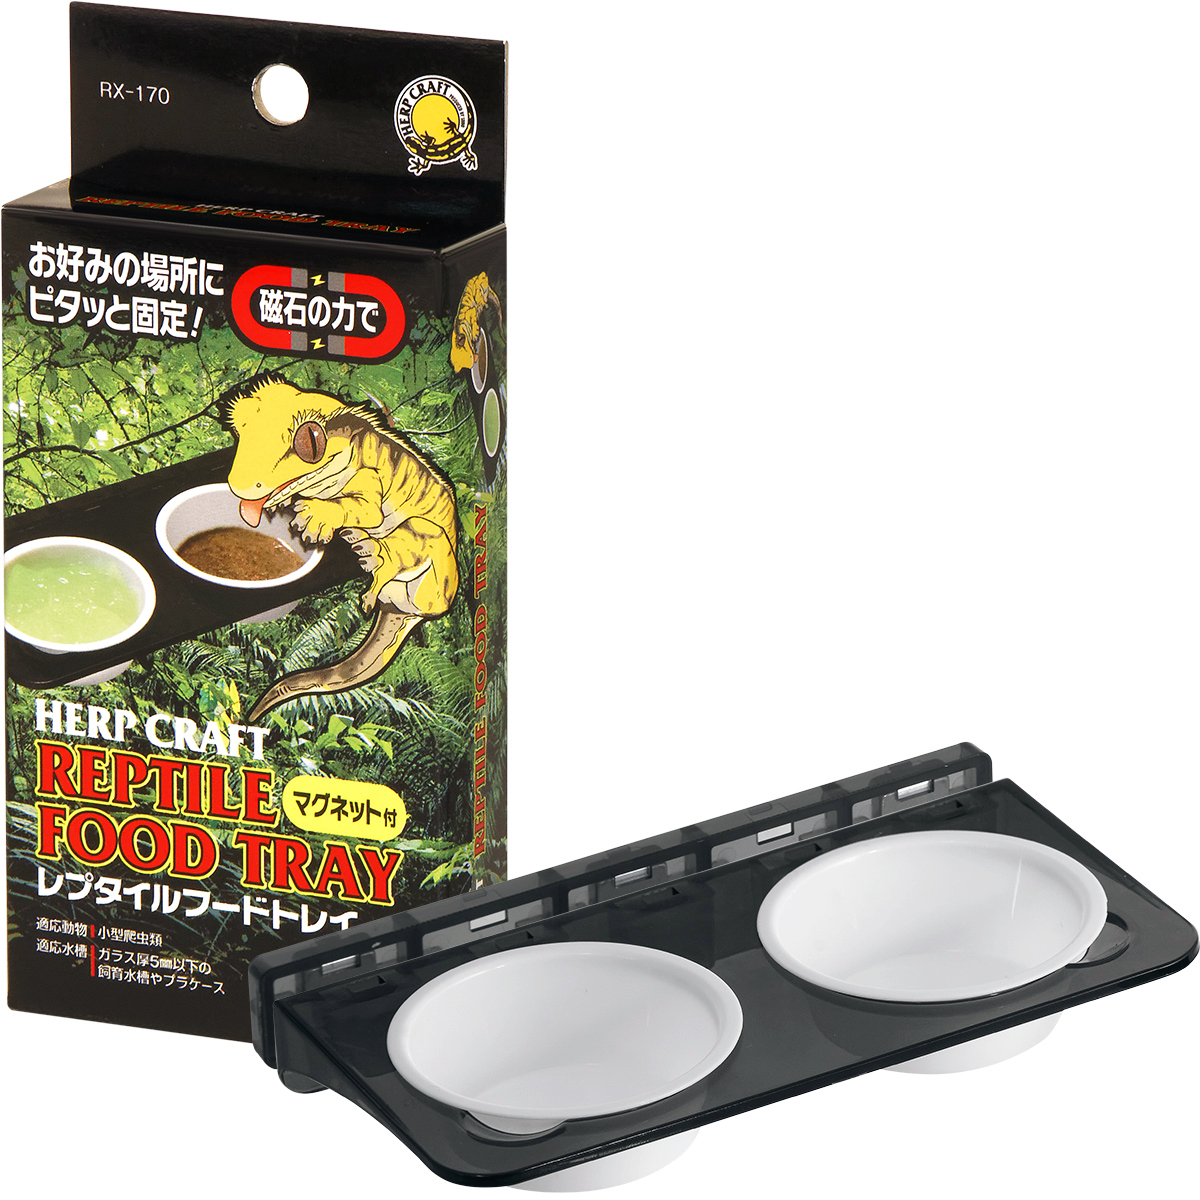 *rep плитка капот tray sdo-(SUDO) арфа craft (HERP CRAFT) рептилии для корм inserting | вода inserting новый товар потребительский налог 0 иен *